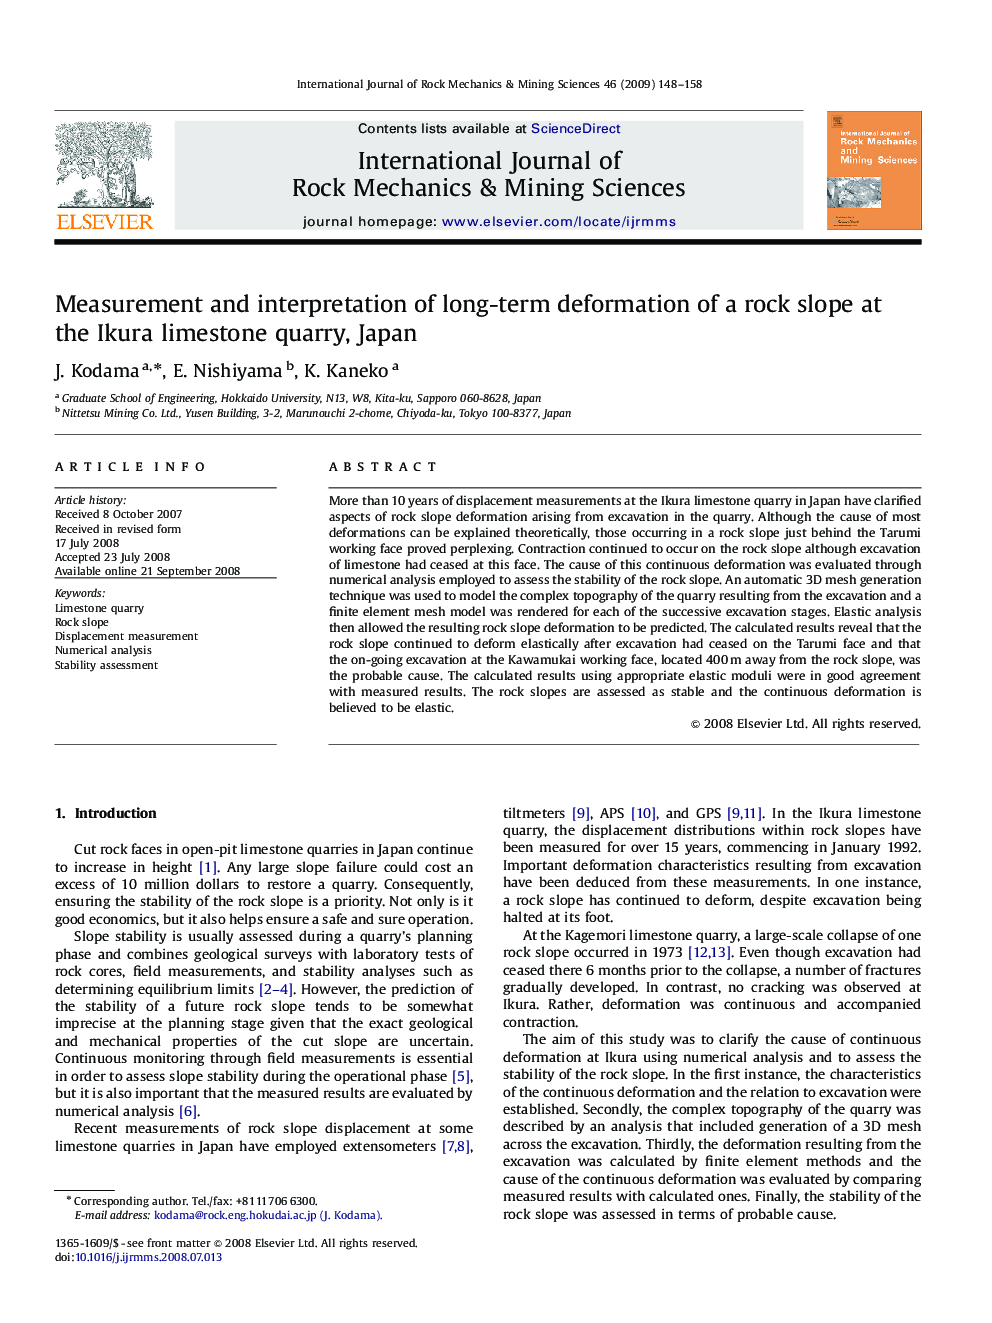 Measurement and interpretation of long-term deformation of a rock slope at the Ikura limestone quarry, Japan